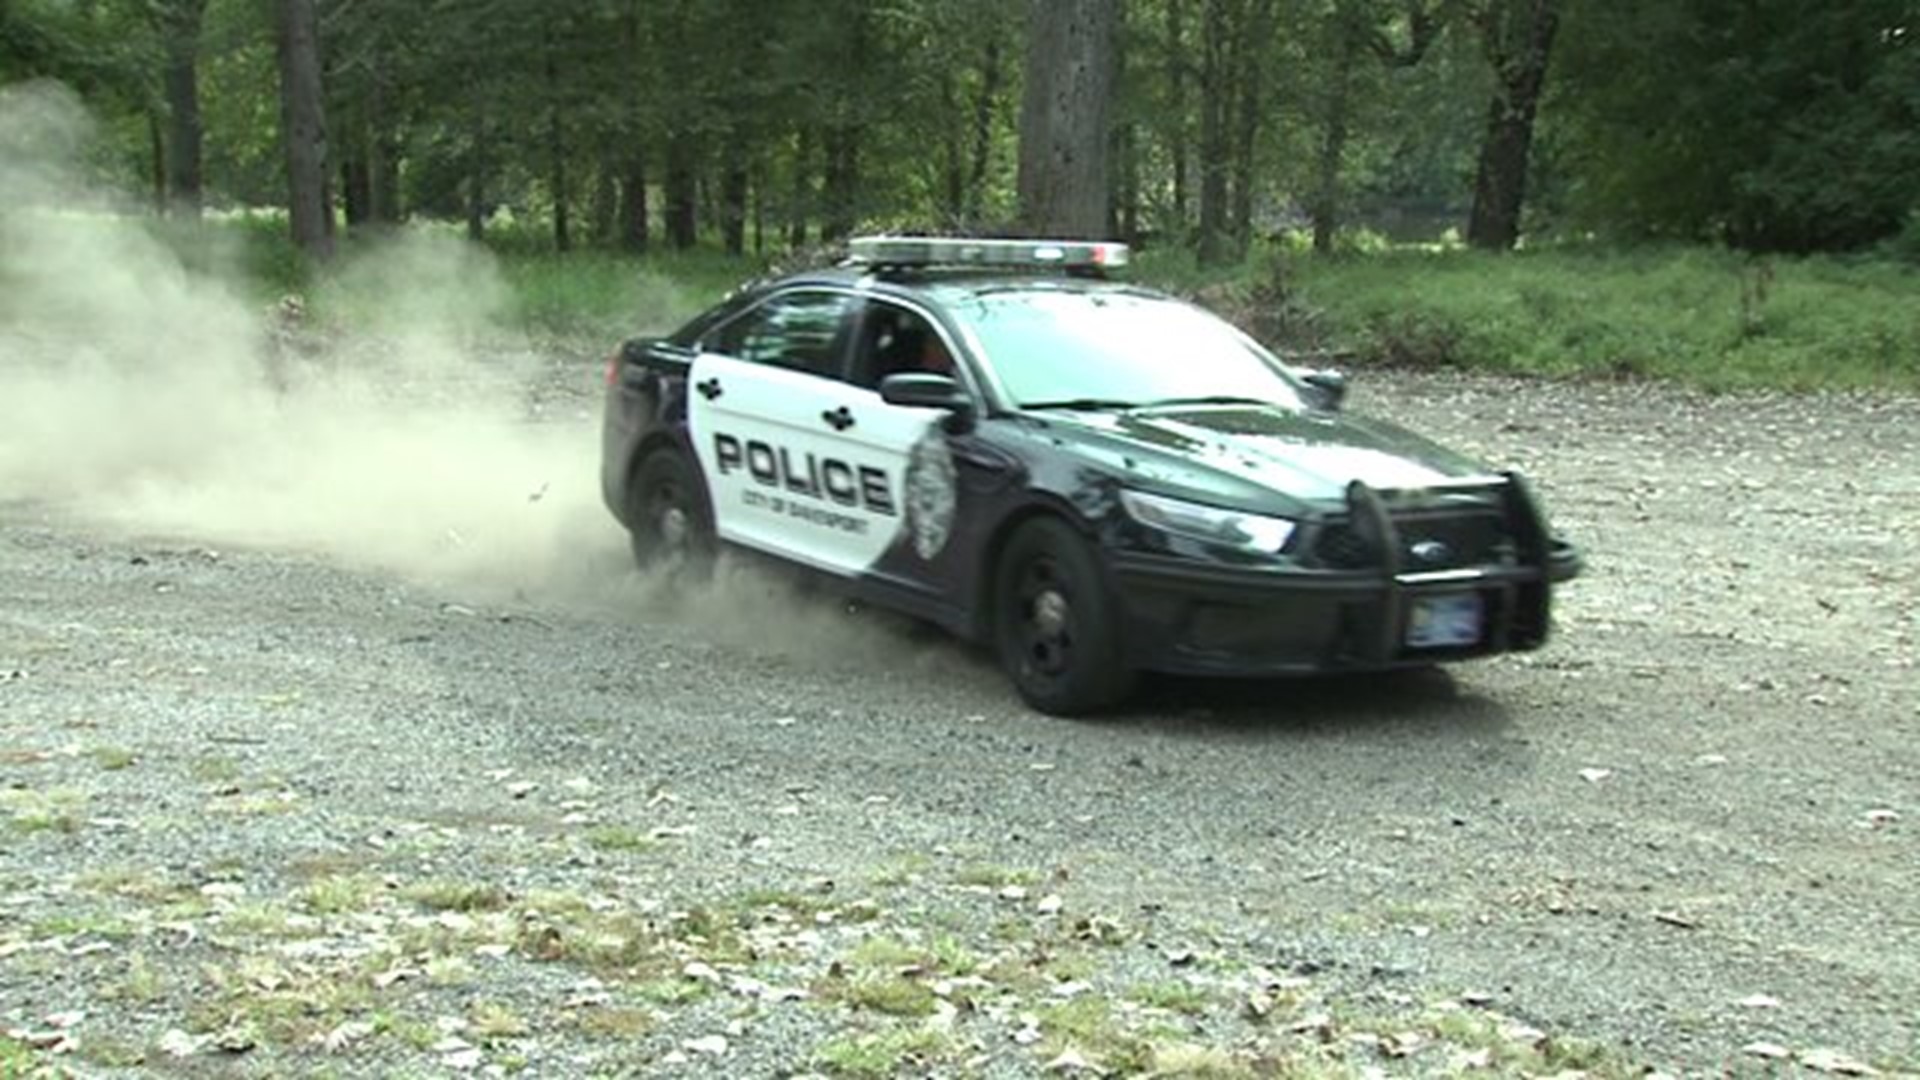 Davenport police train for pursuits